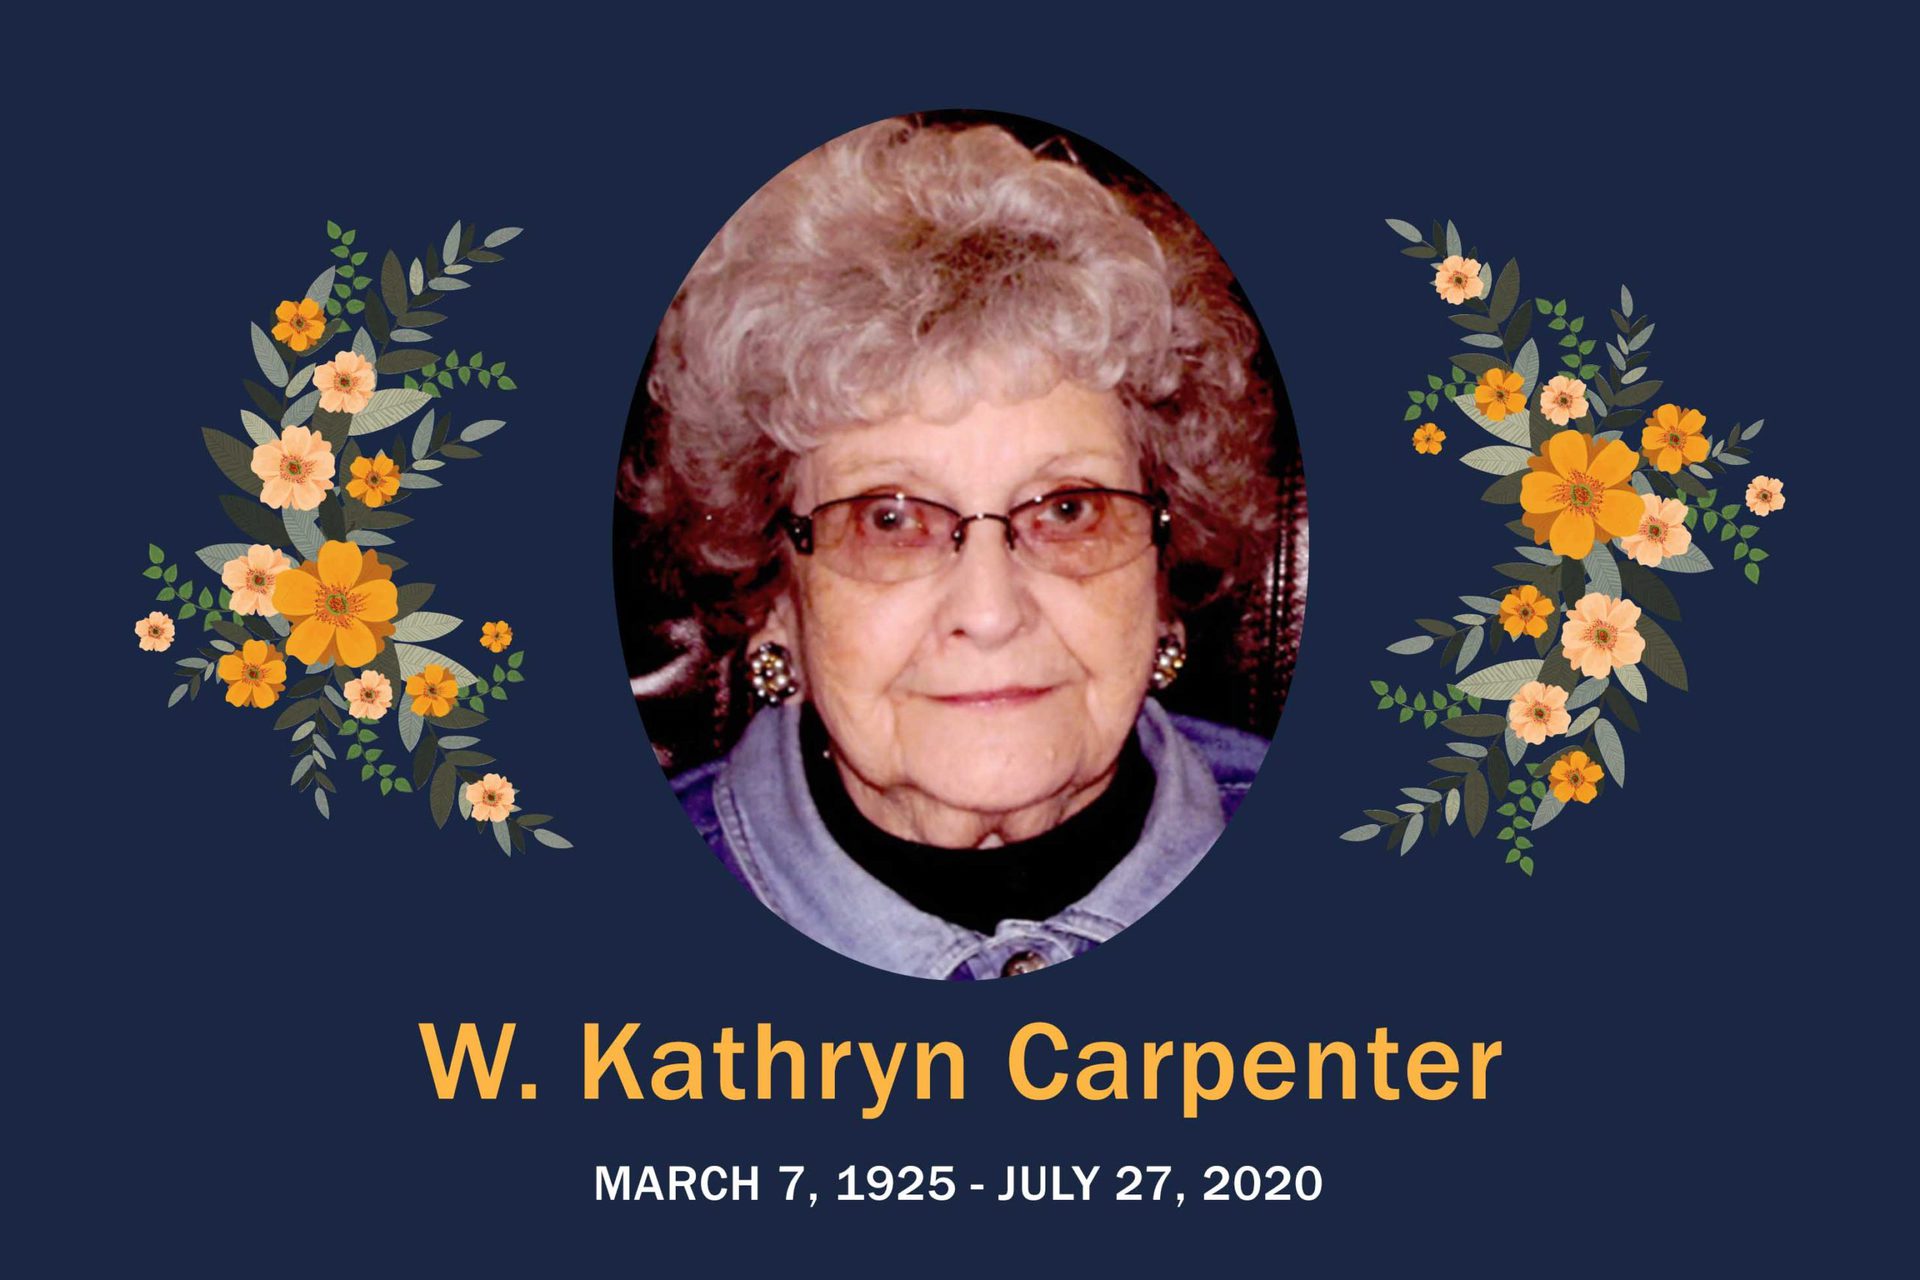 Obituary Kathryn Carpenter